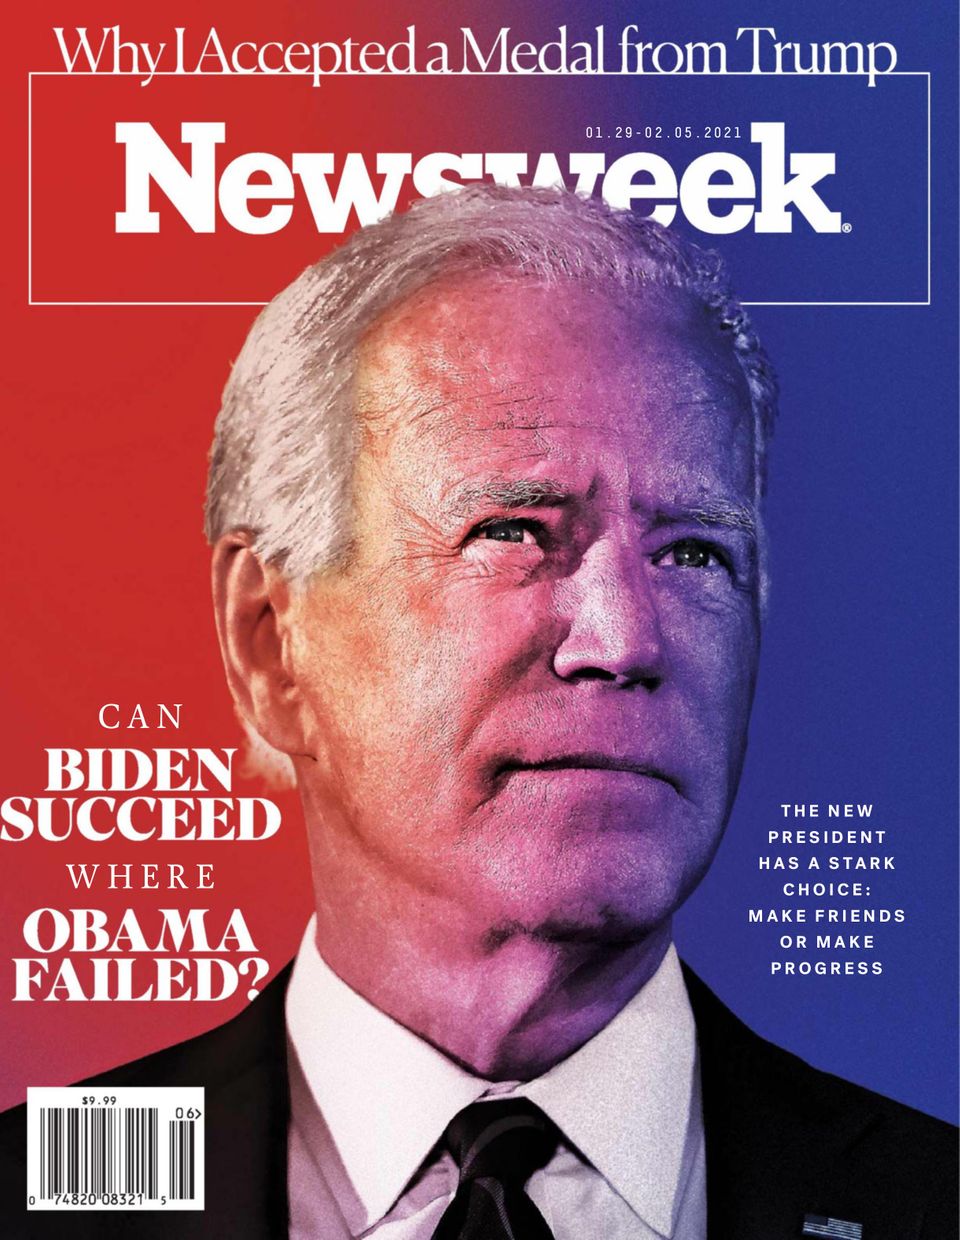 Newsweek Magazine - Get your Digital Subscription